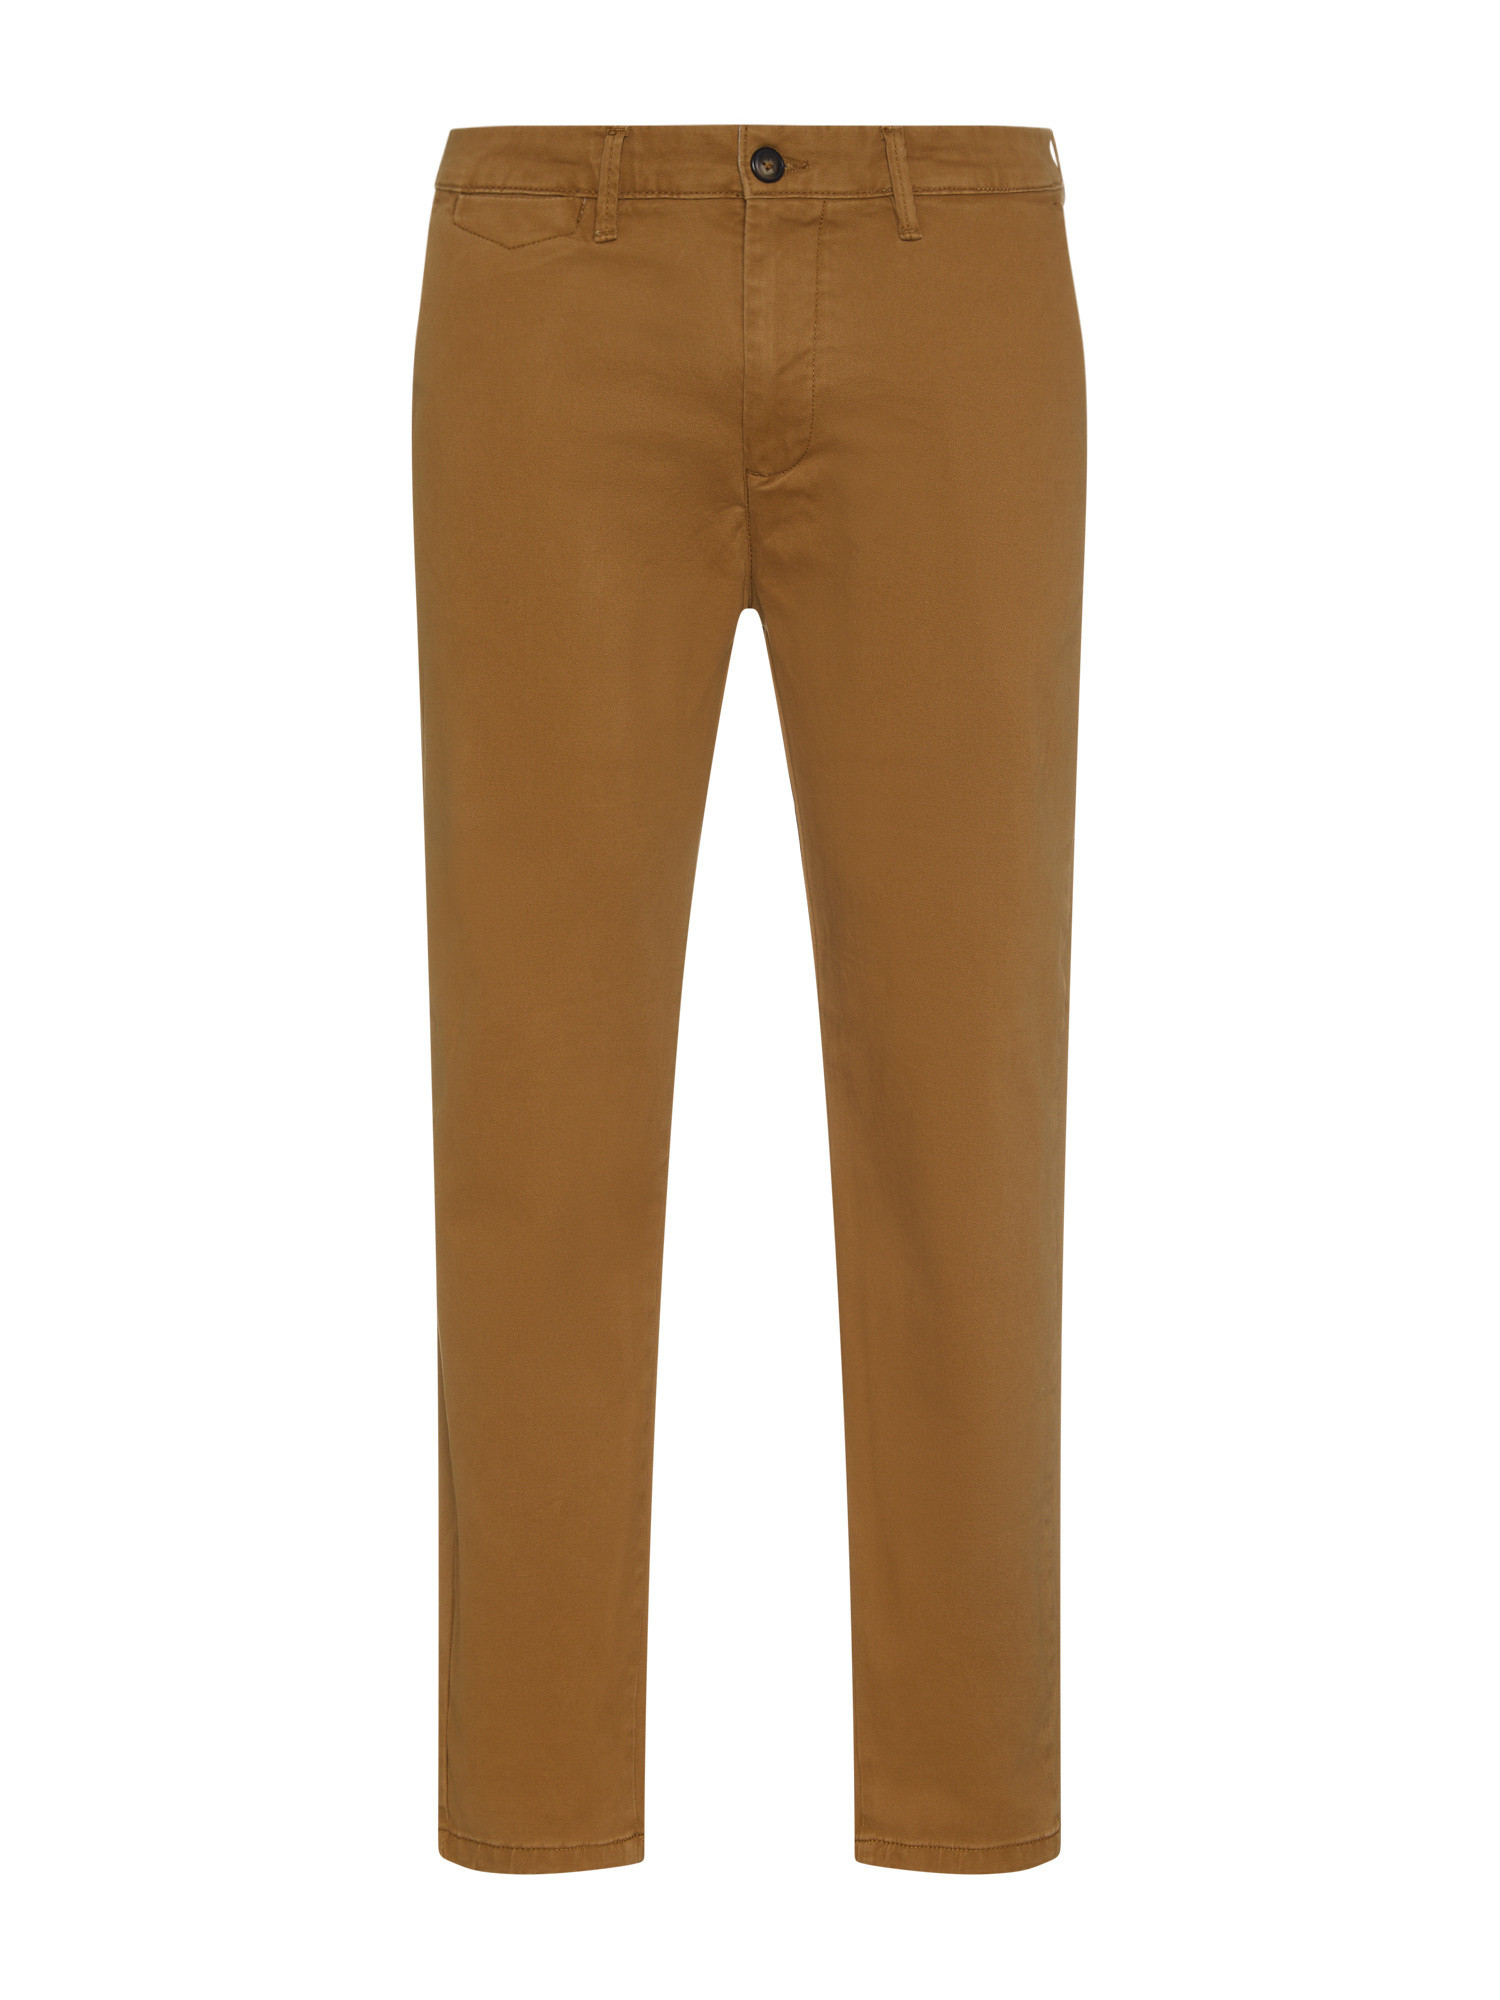 JCT - Chino trousers, Dark Yellow, large image number 0